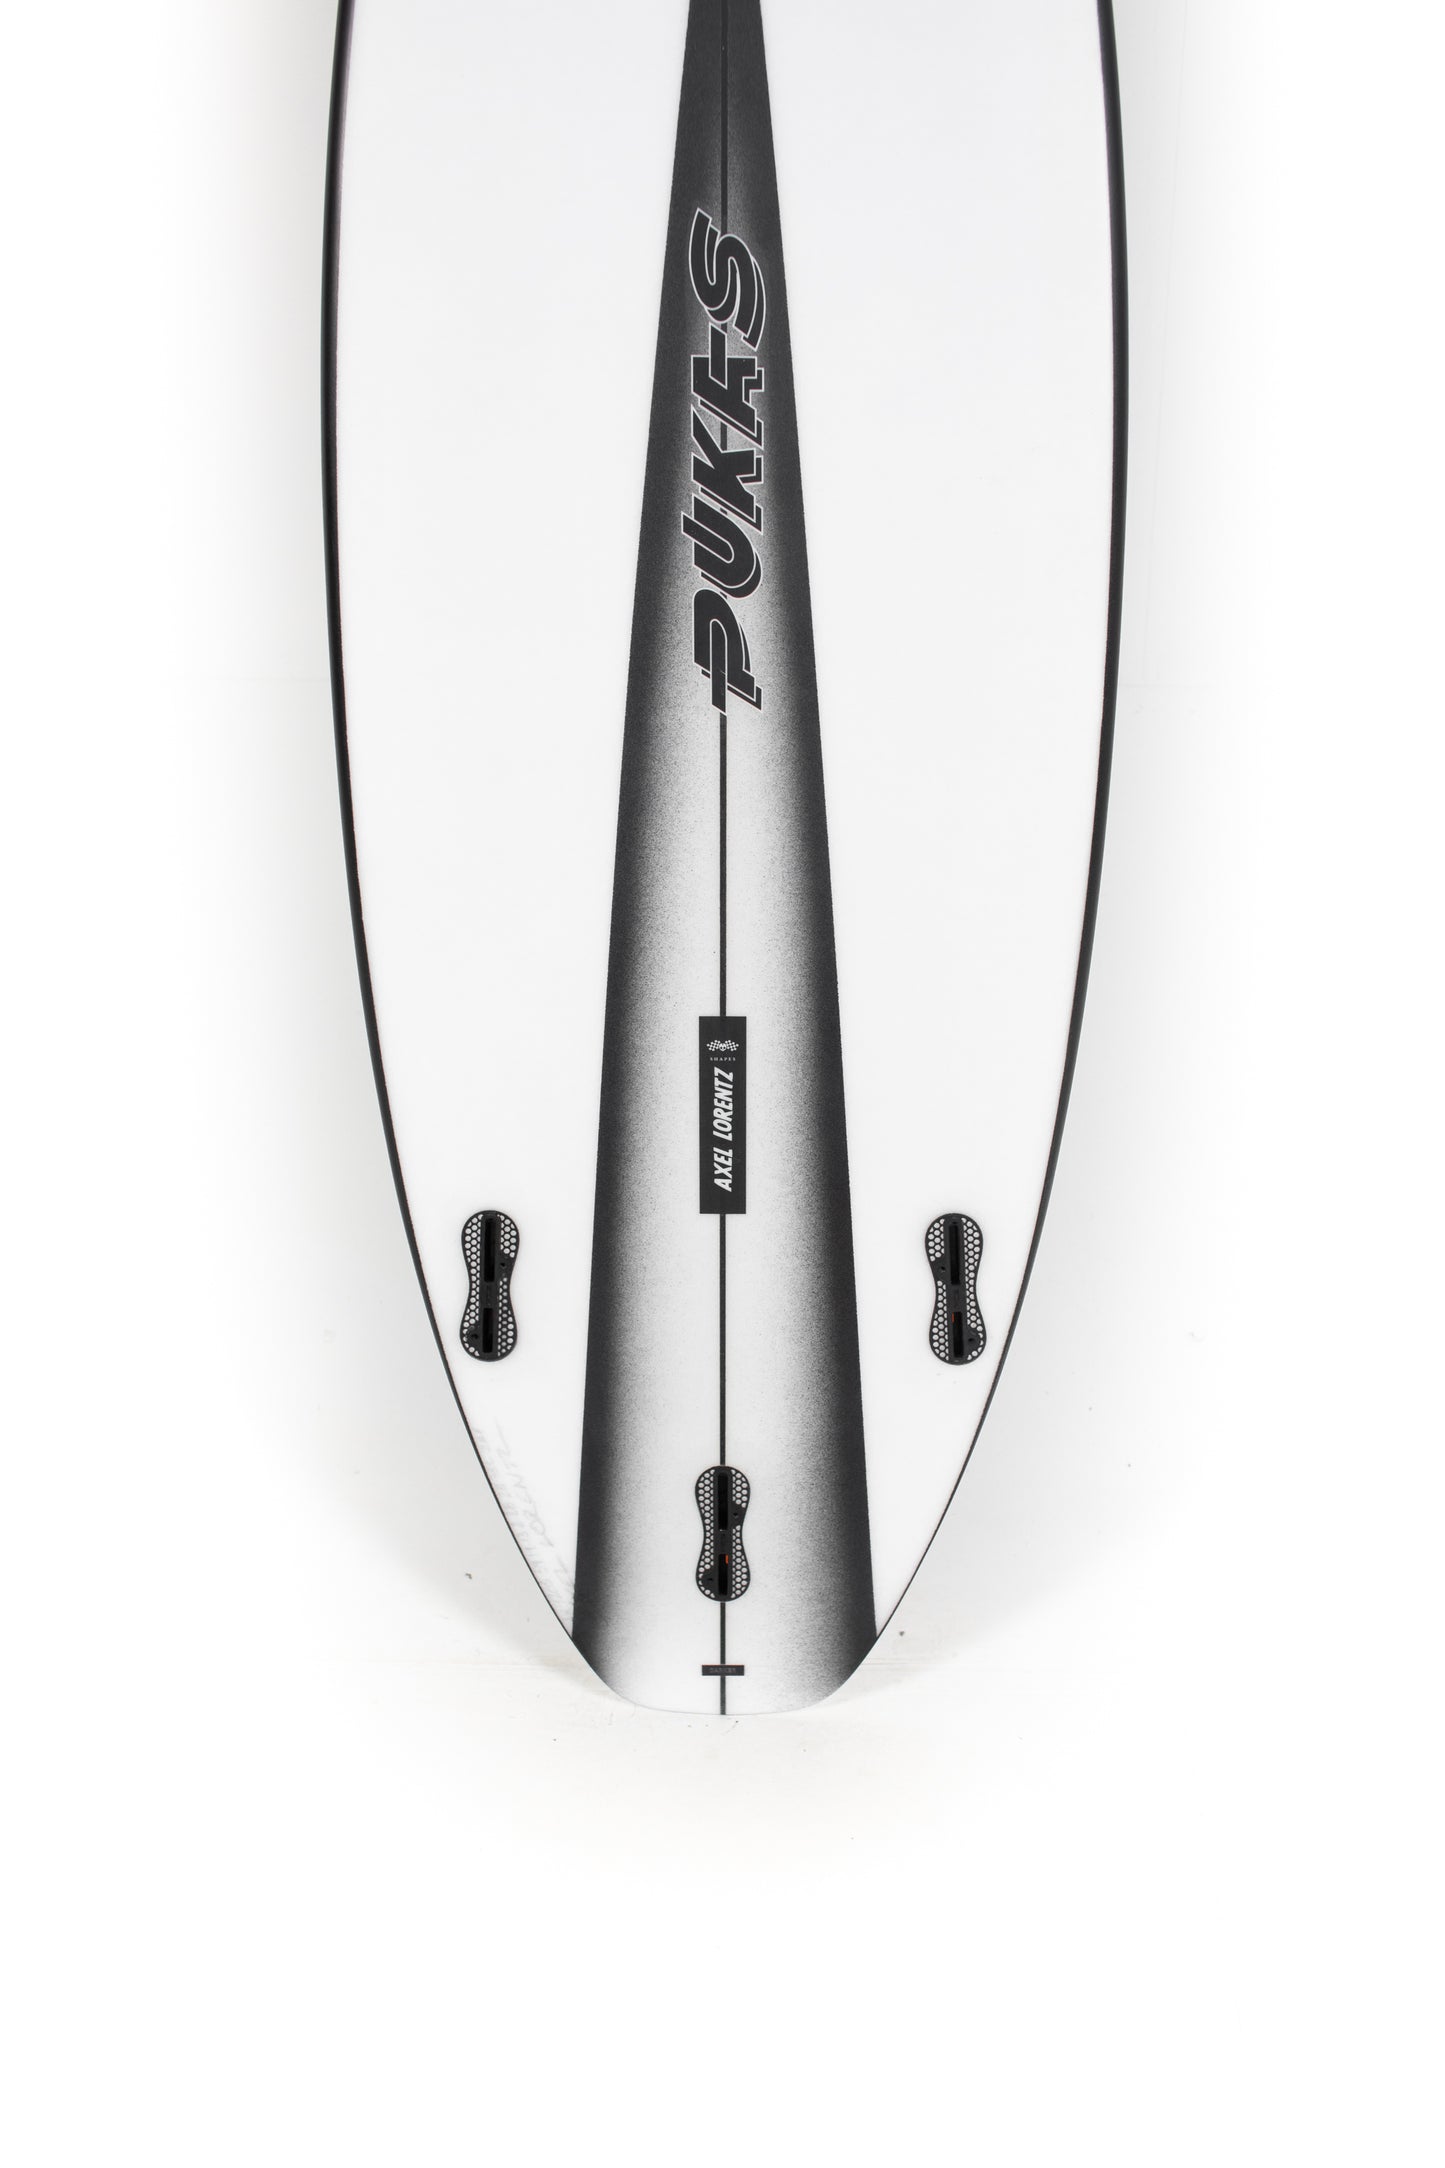 
                  
                    Pukas Surf Shop - Pukas Surfboard - DARKER by Axel Lorentz - 5'9" x 19,13 x 2,28 x 26,72L. - AX09205
                  
                